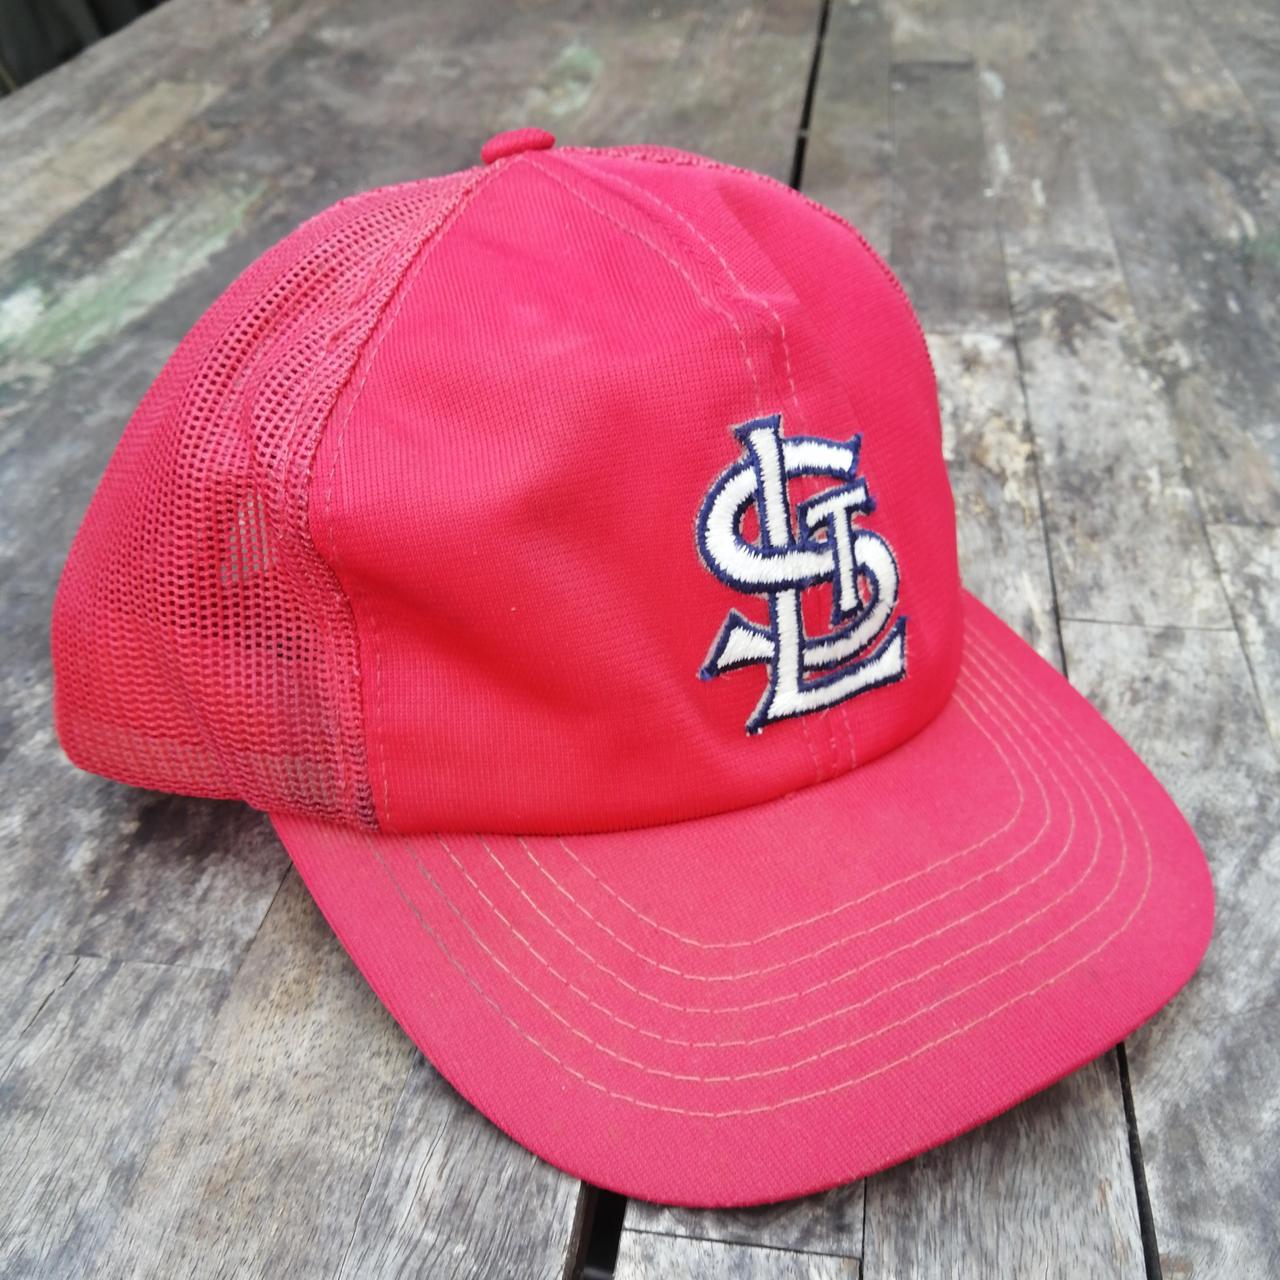 Saint Louis Cardinals baseball cap Worn some but - Depop